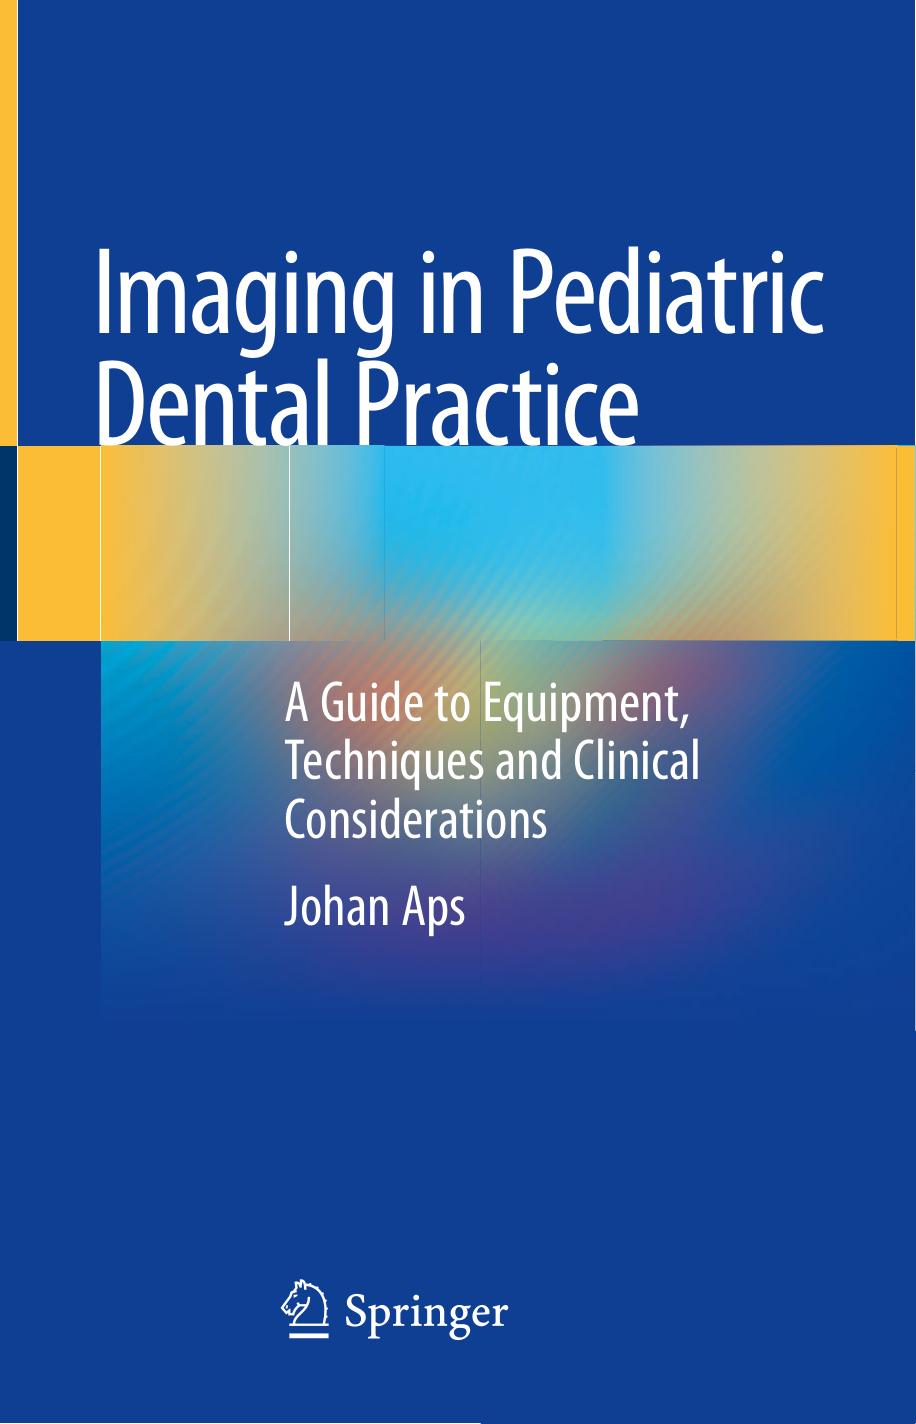 Imaging in Pediatric Dental Practice by Johan Aps